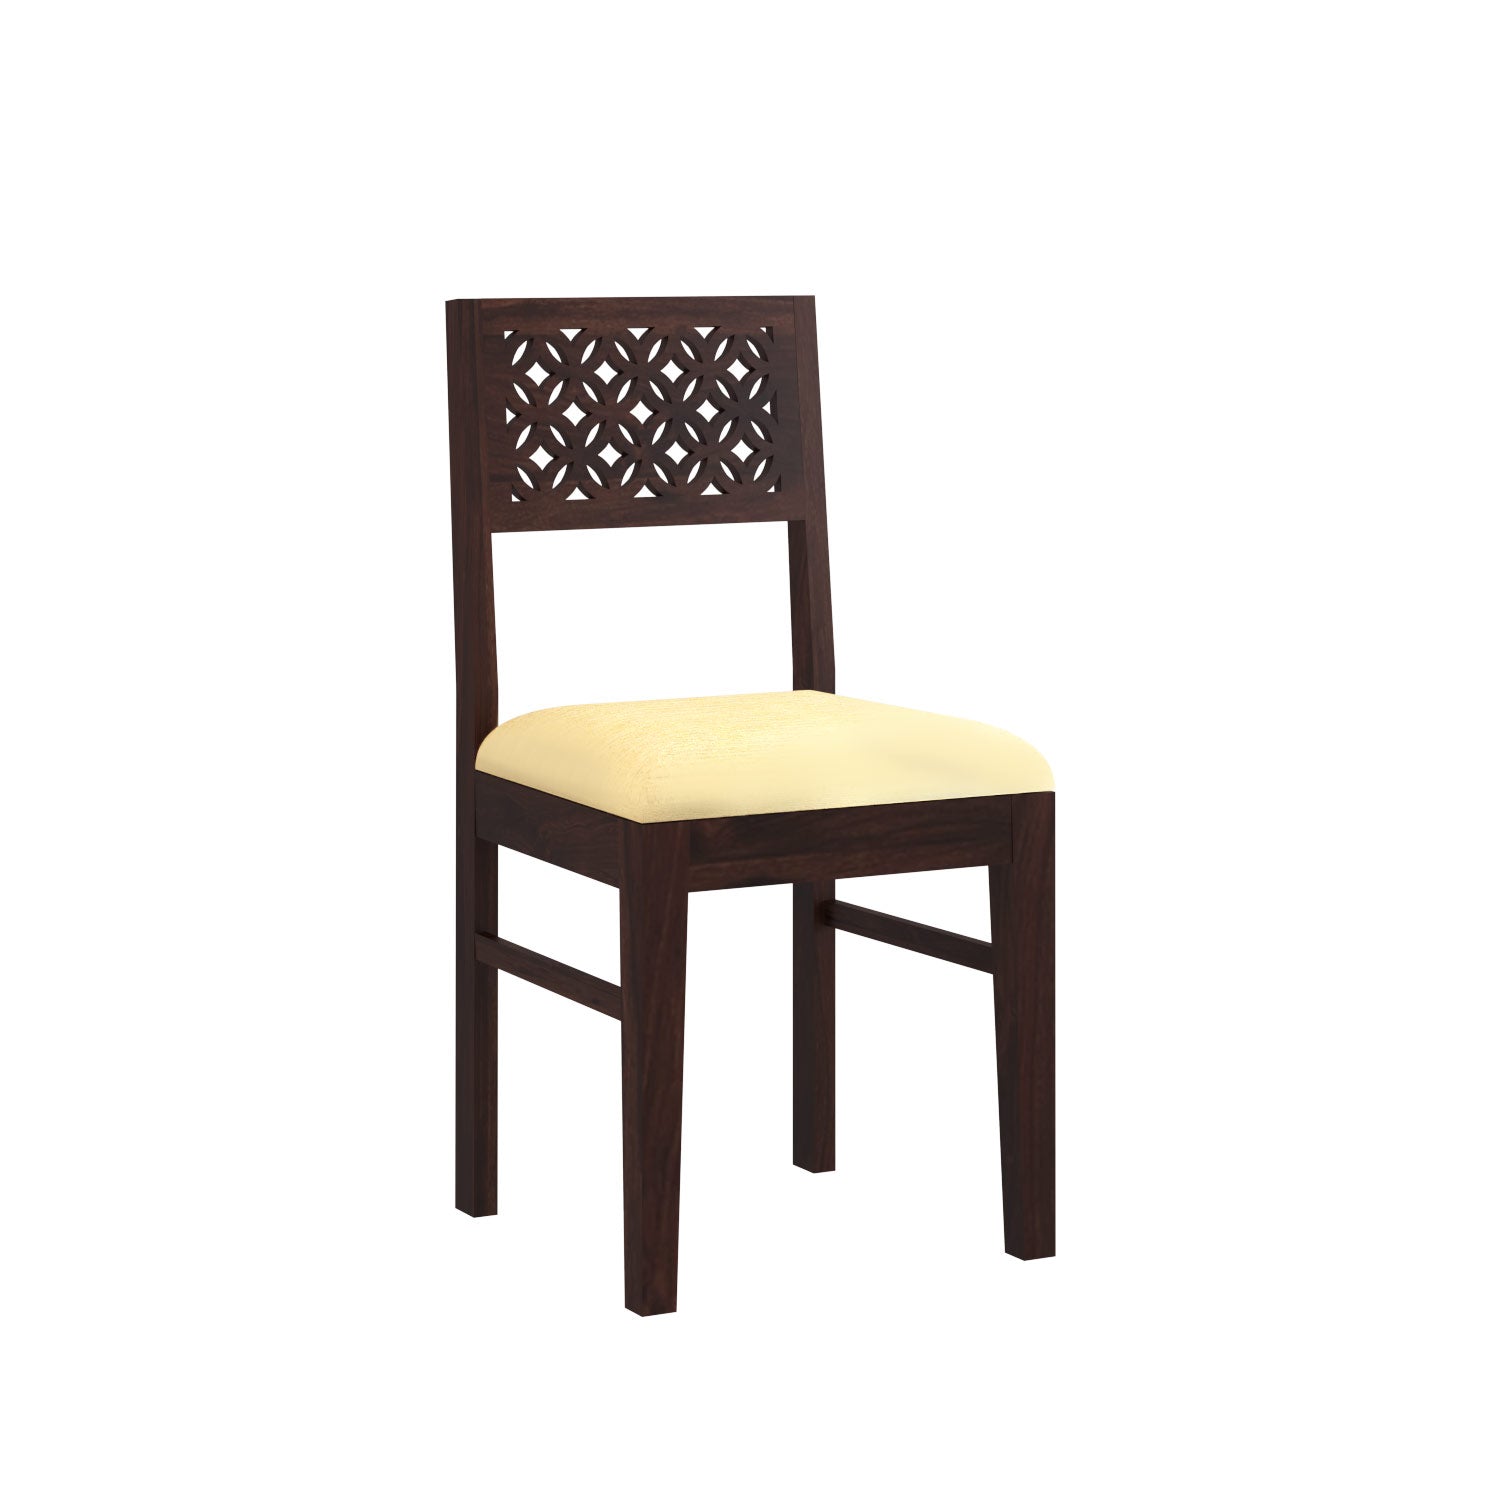 Monstro Solid Sheesham Wood Chair With Cushion (Walnut Finish)